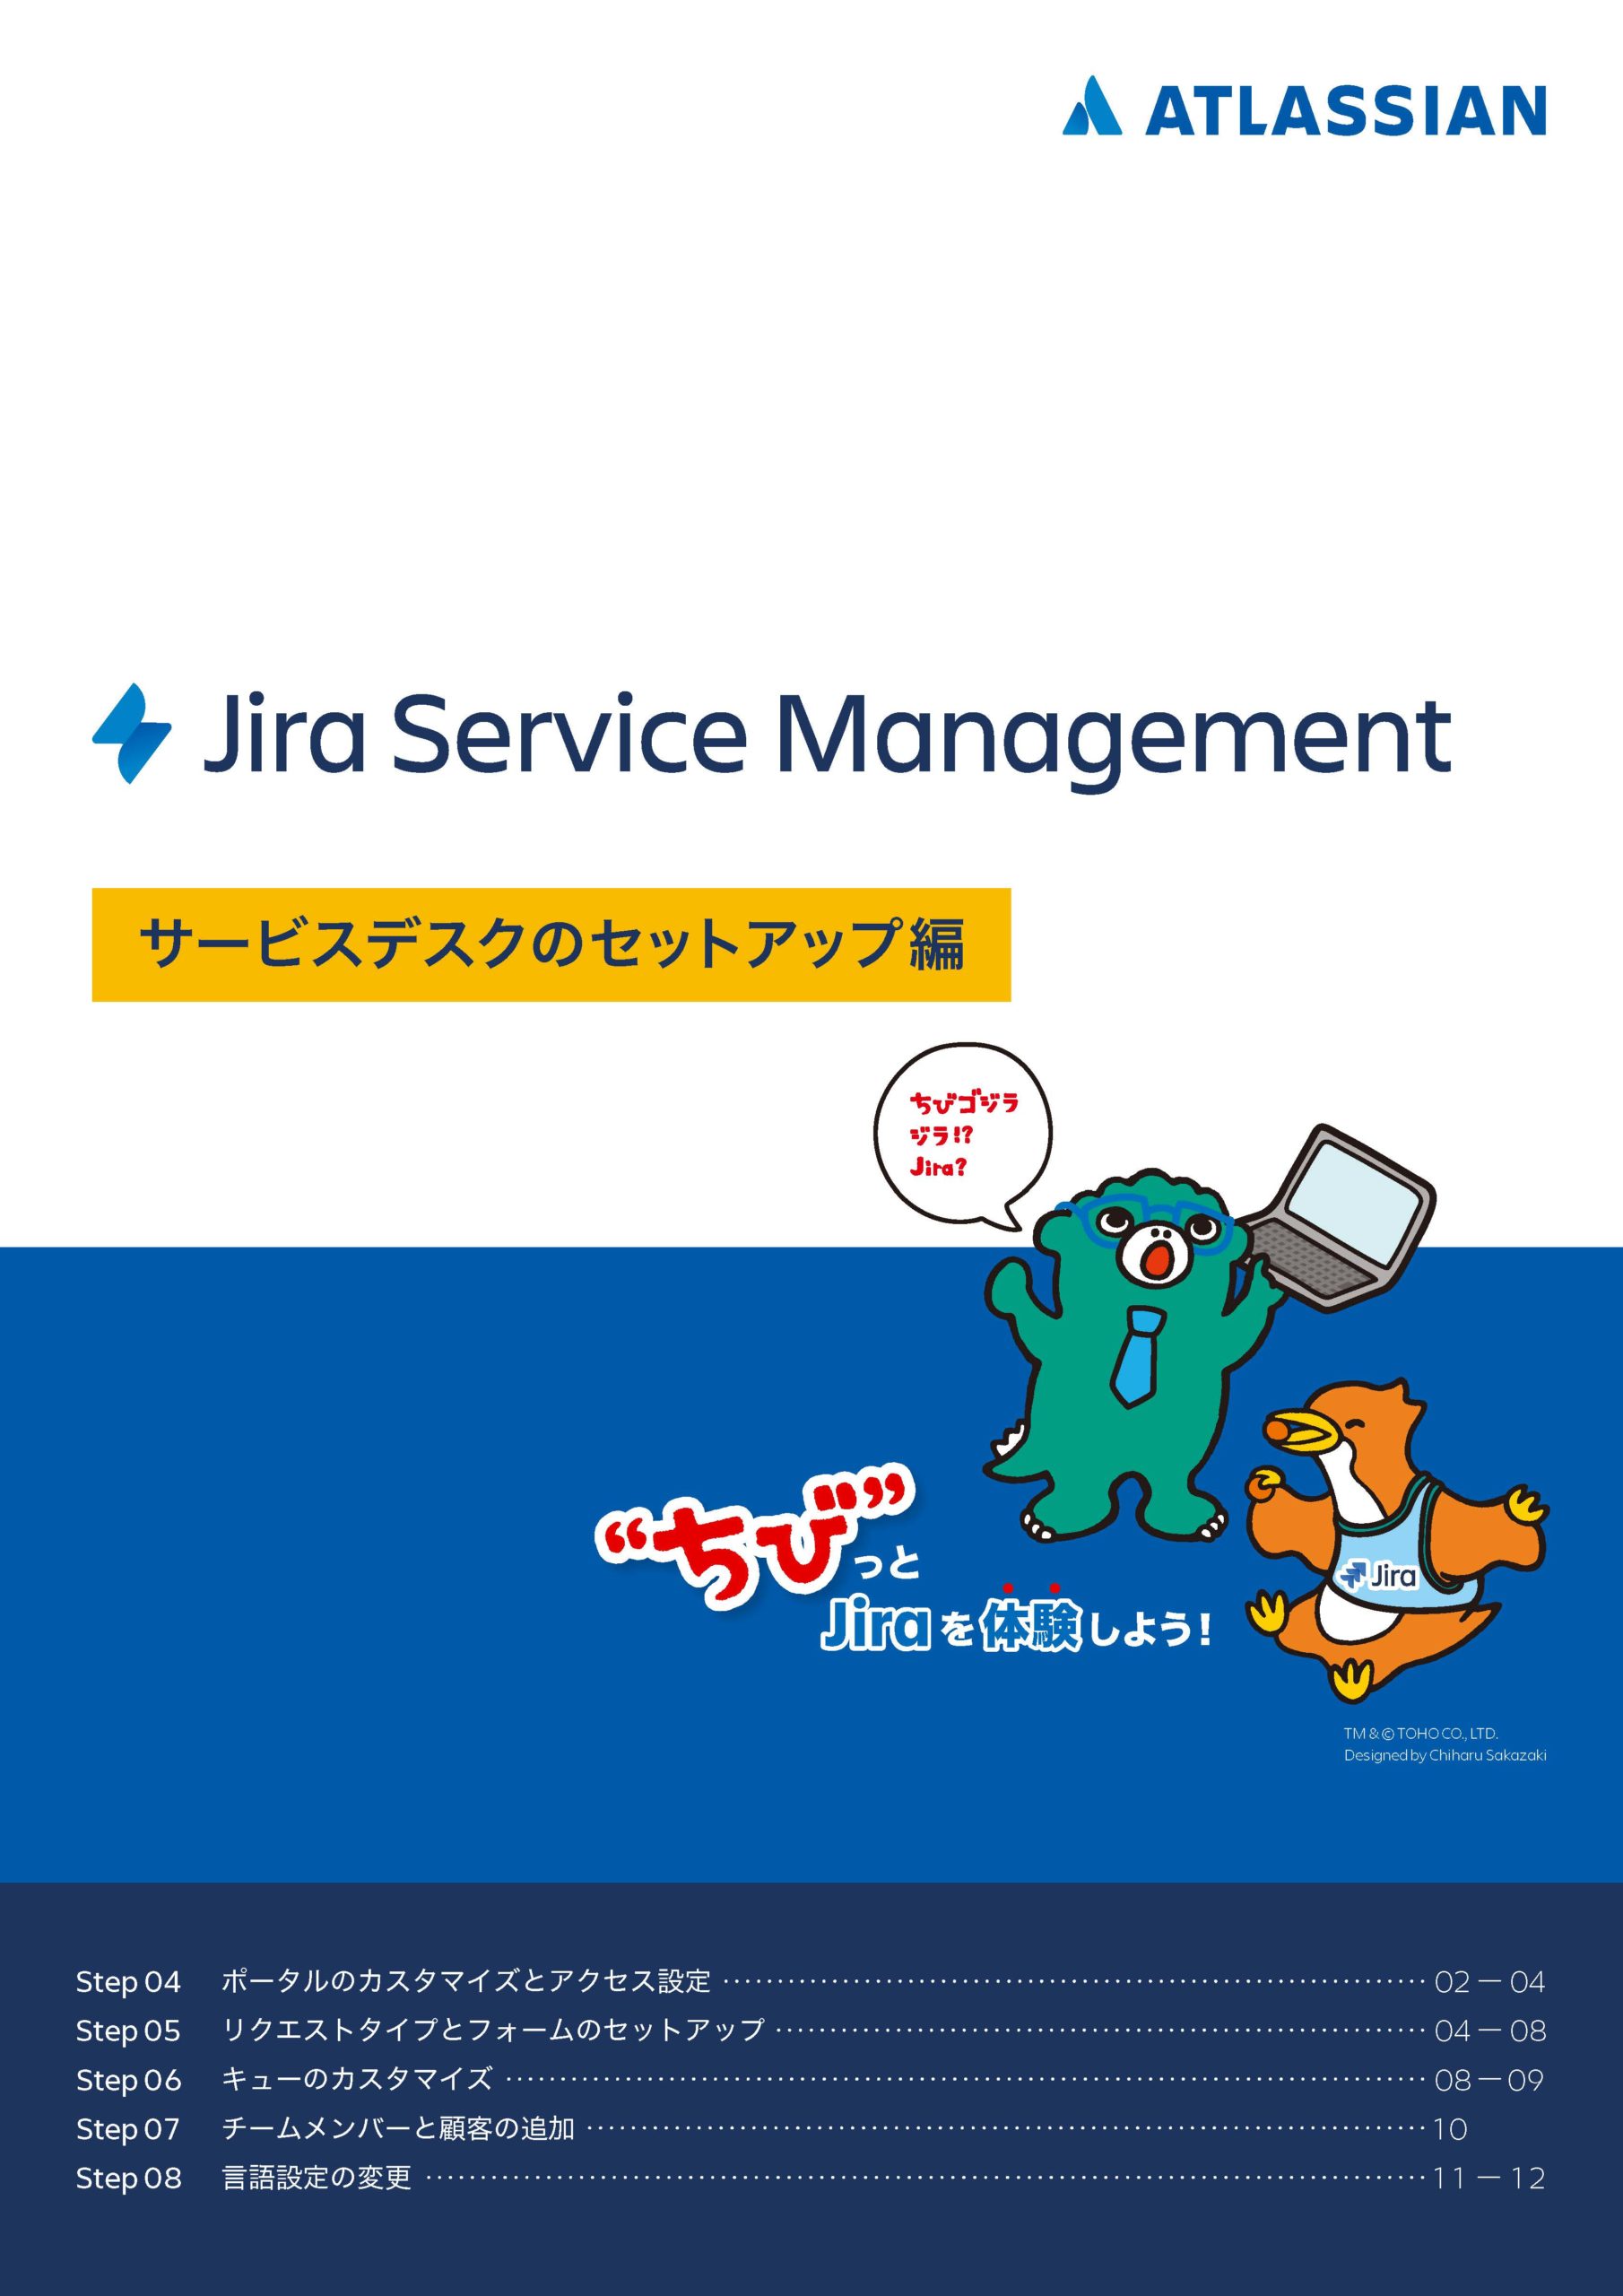 Jira Service Management サービスデスクセットアップ編